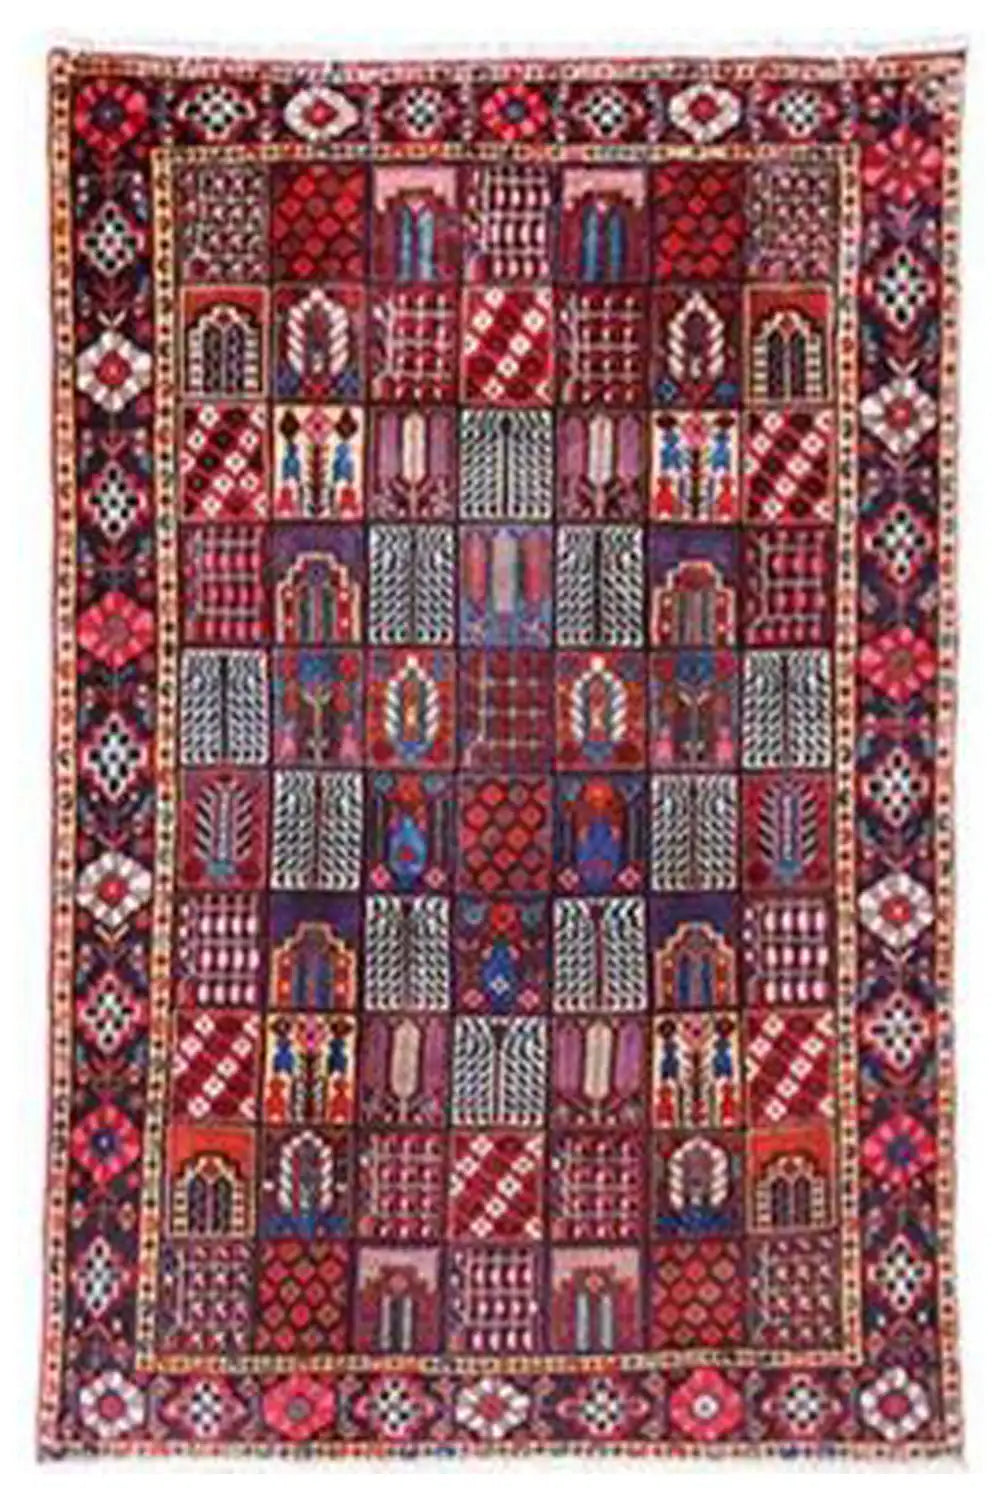 Bakhtiari - 8968603 (312x205cm) - German Carpet Shop